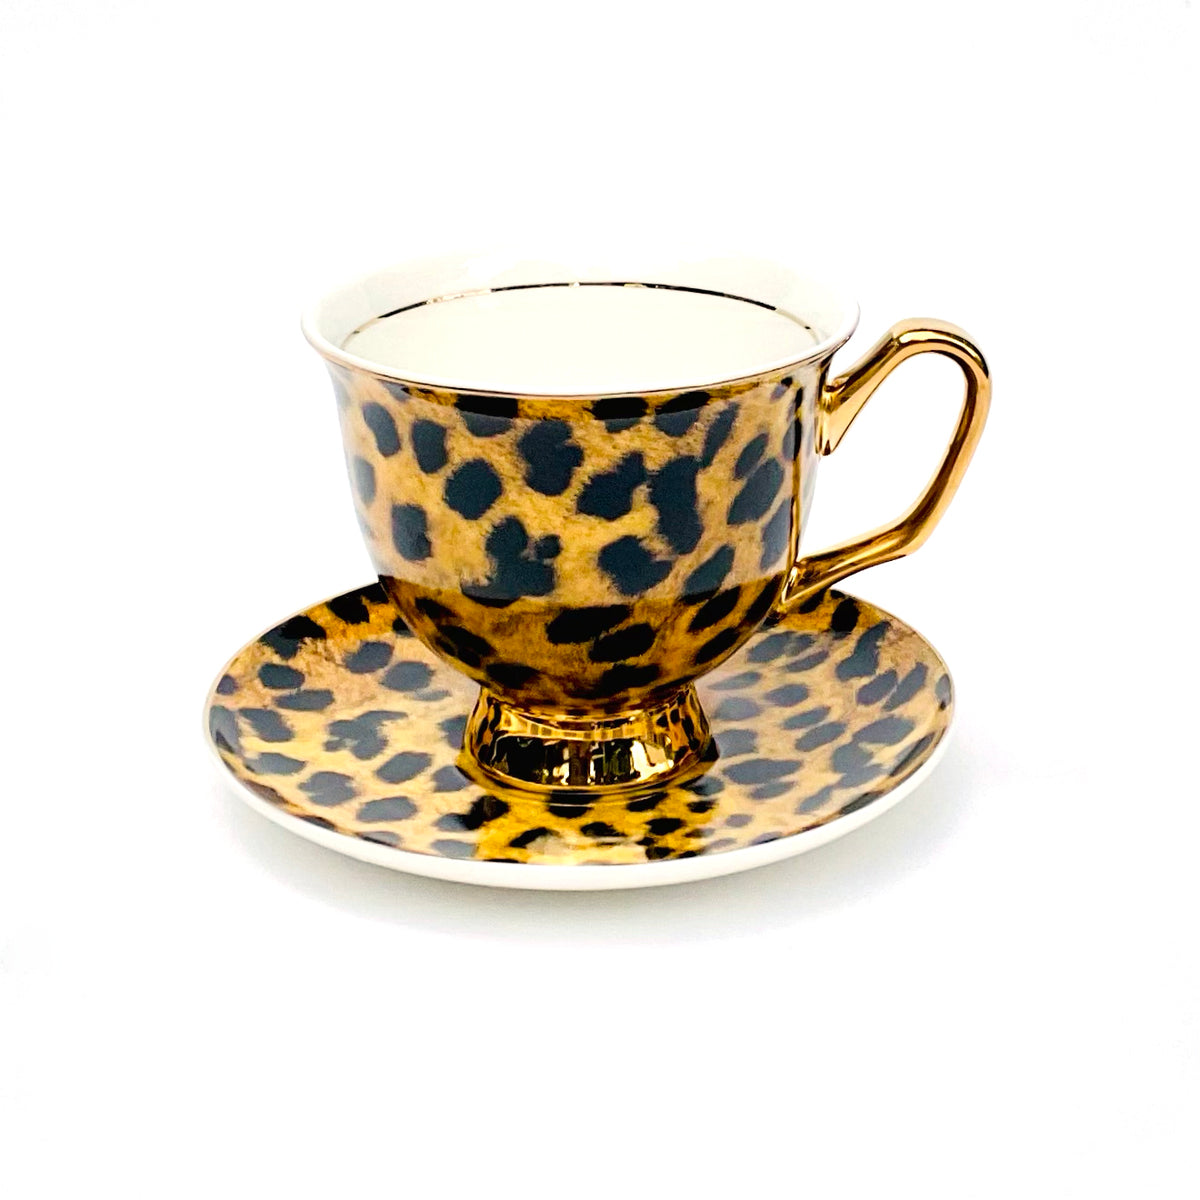 XL Leopard Print Teacup and Saucer